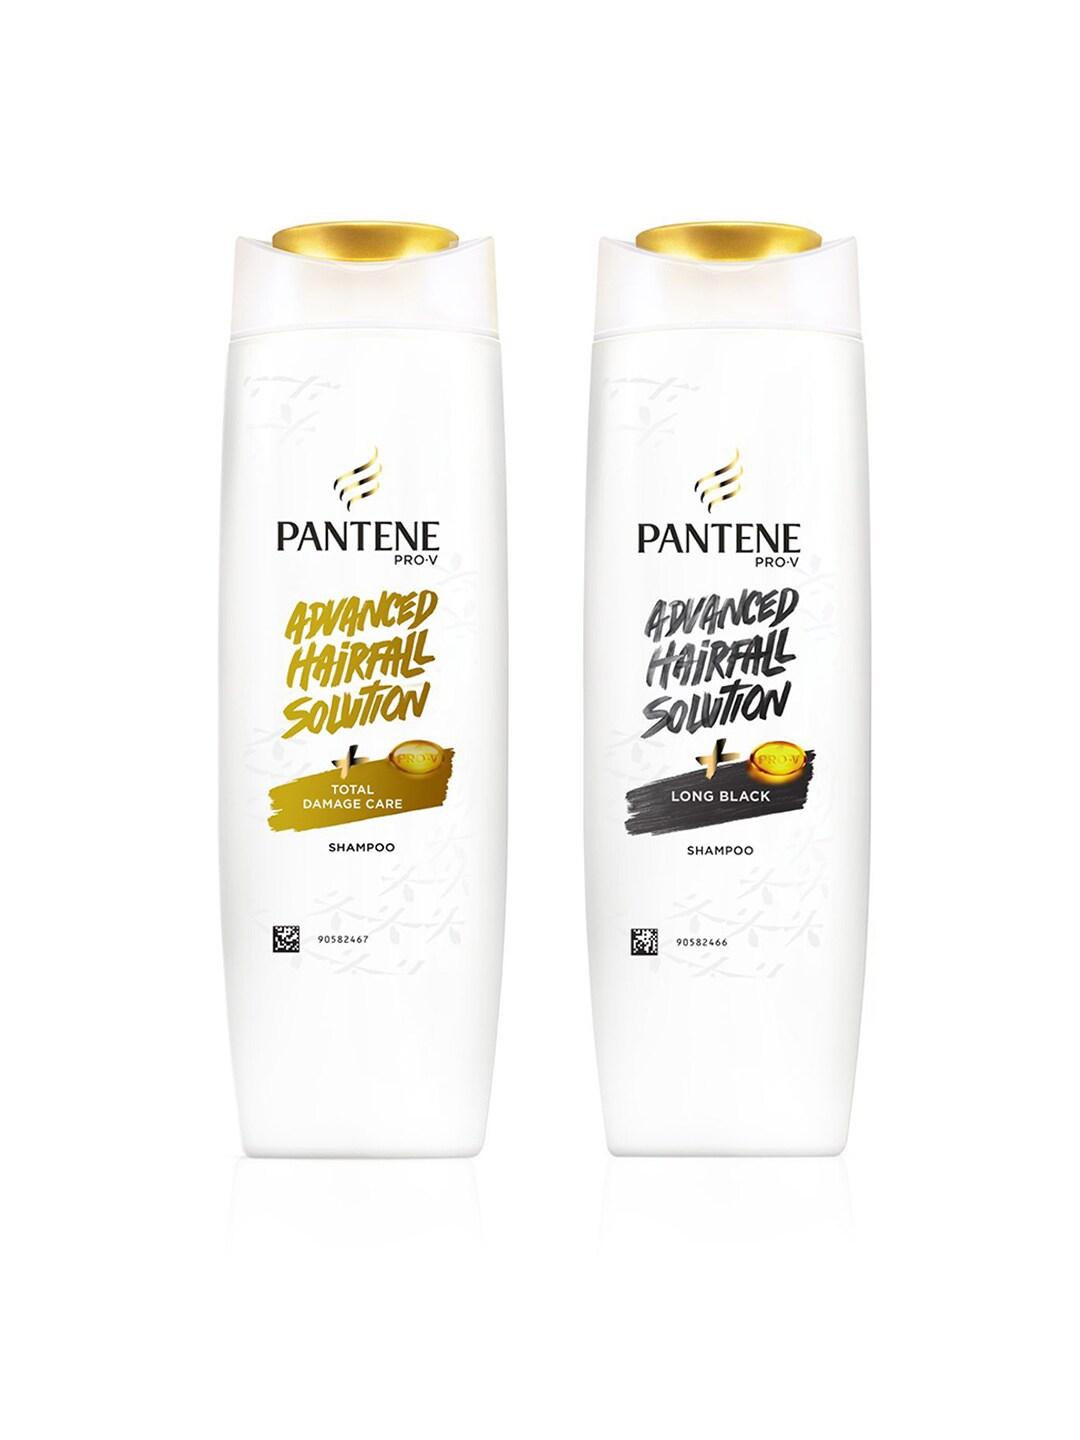 Pantene Set of 2 Shampoos